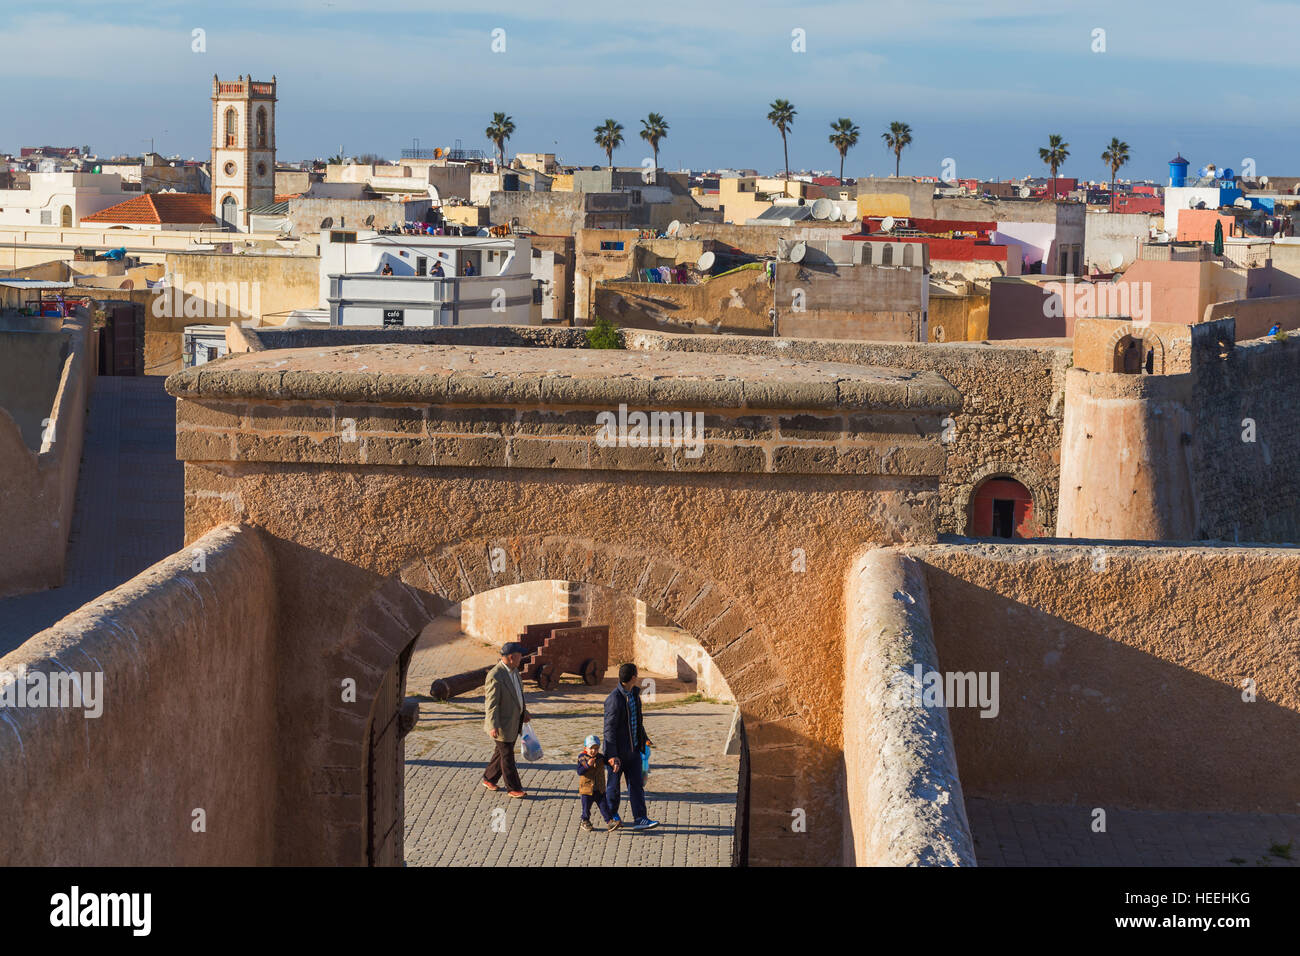 La forteresse portugaise et port, Al Jadida, Maroc Banque D'Images